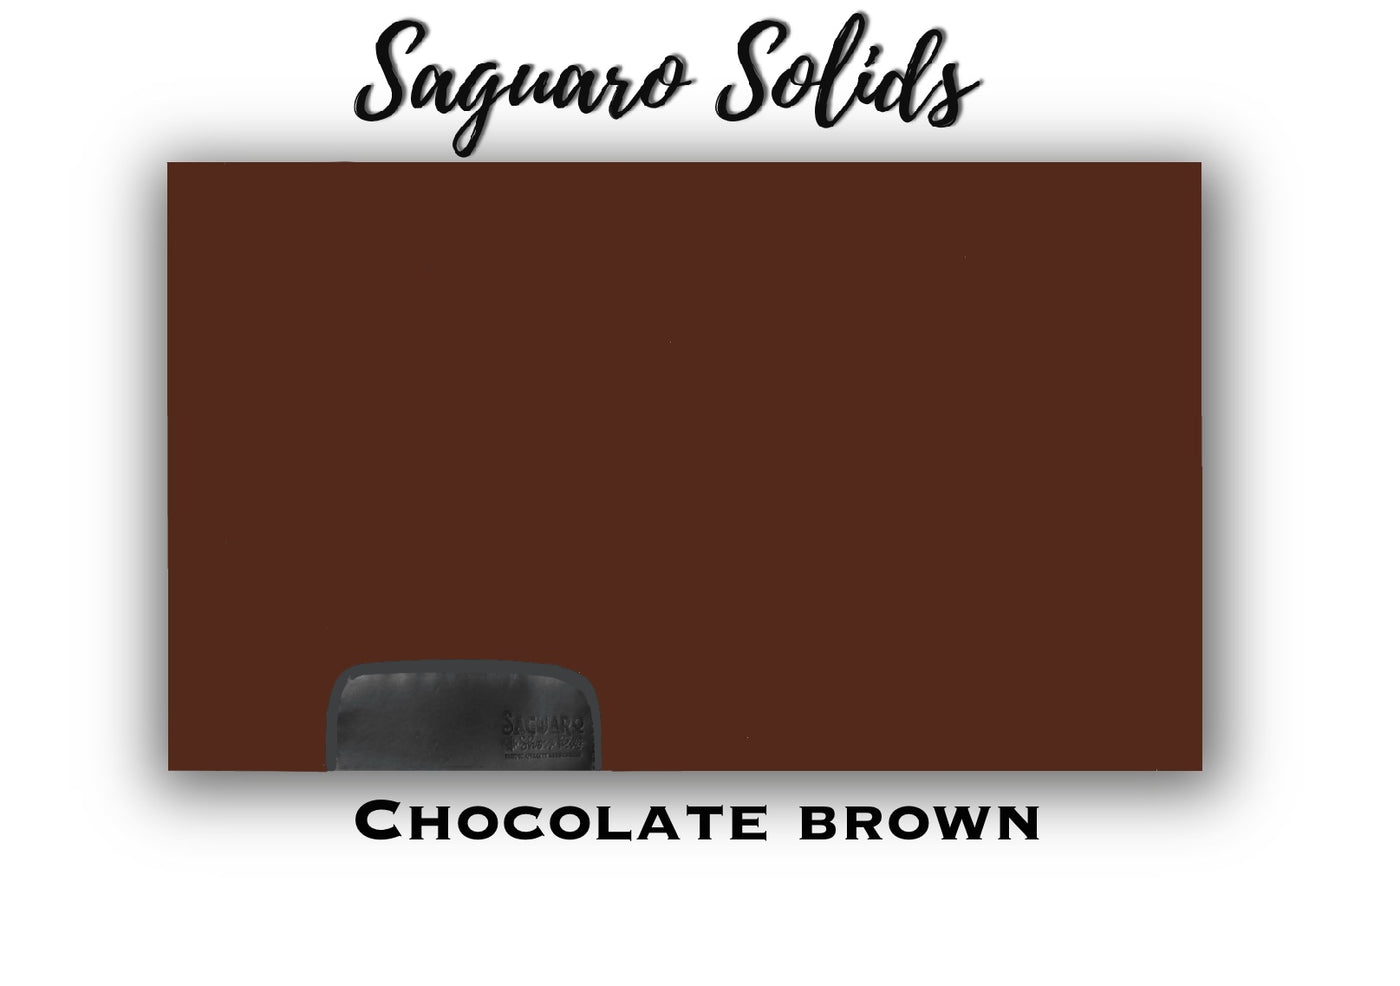 Saguaro Solid "Chocolate Brown" Show Pad (SEMI-CUSTOM)